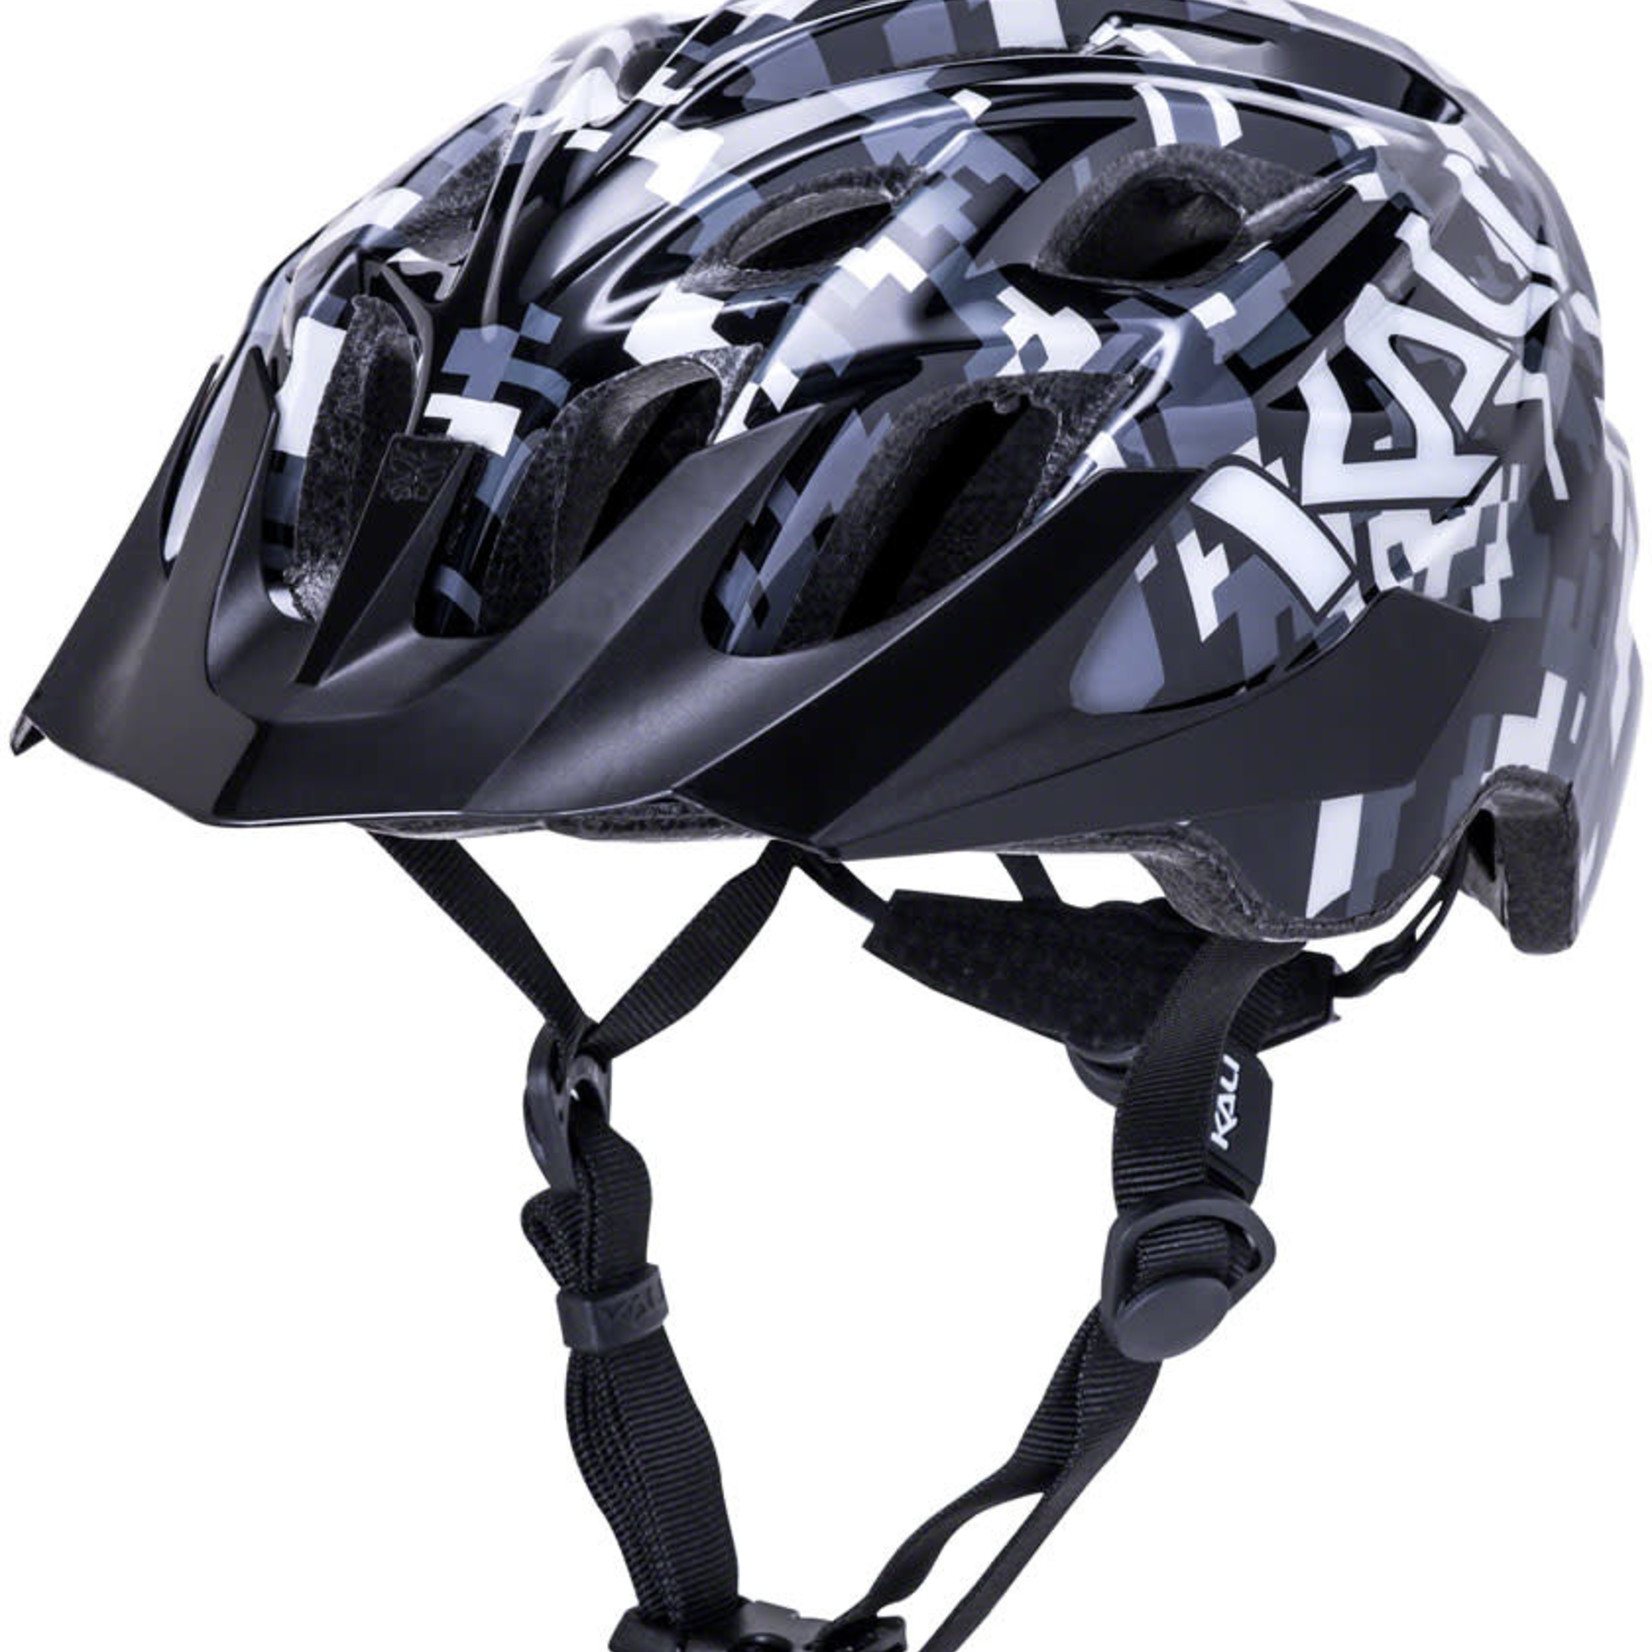 Kali Protectives Kali Protectives Chakra Youth Helmet - Pixel Black, Youth, One Size